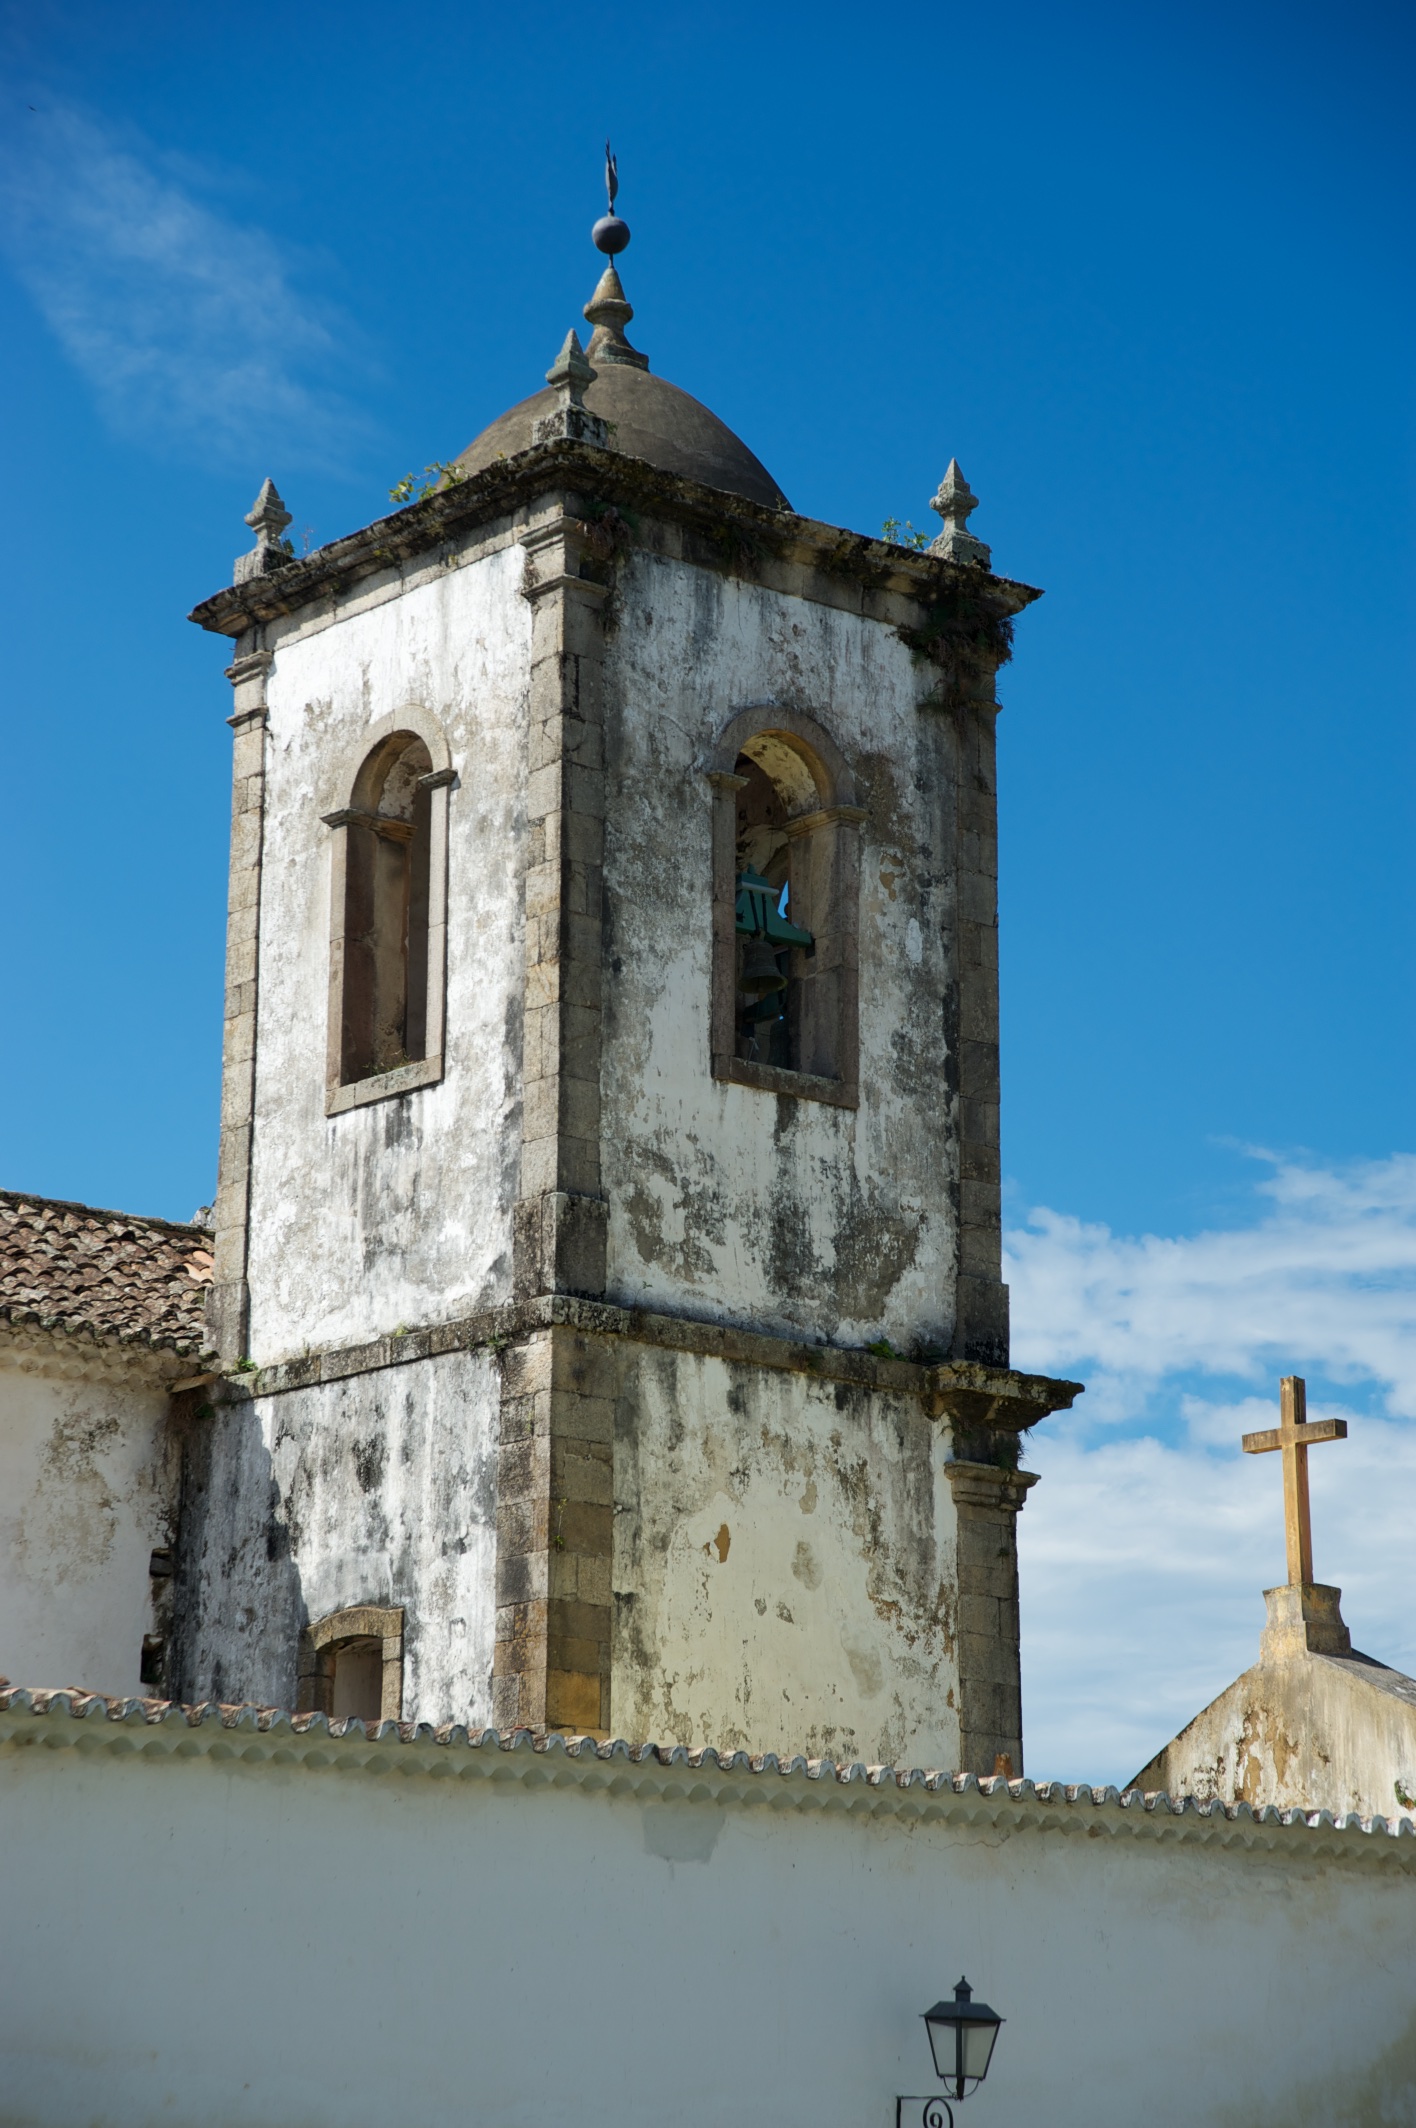  Church spire, Paraty, Costa Verde, Brazil 